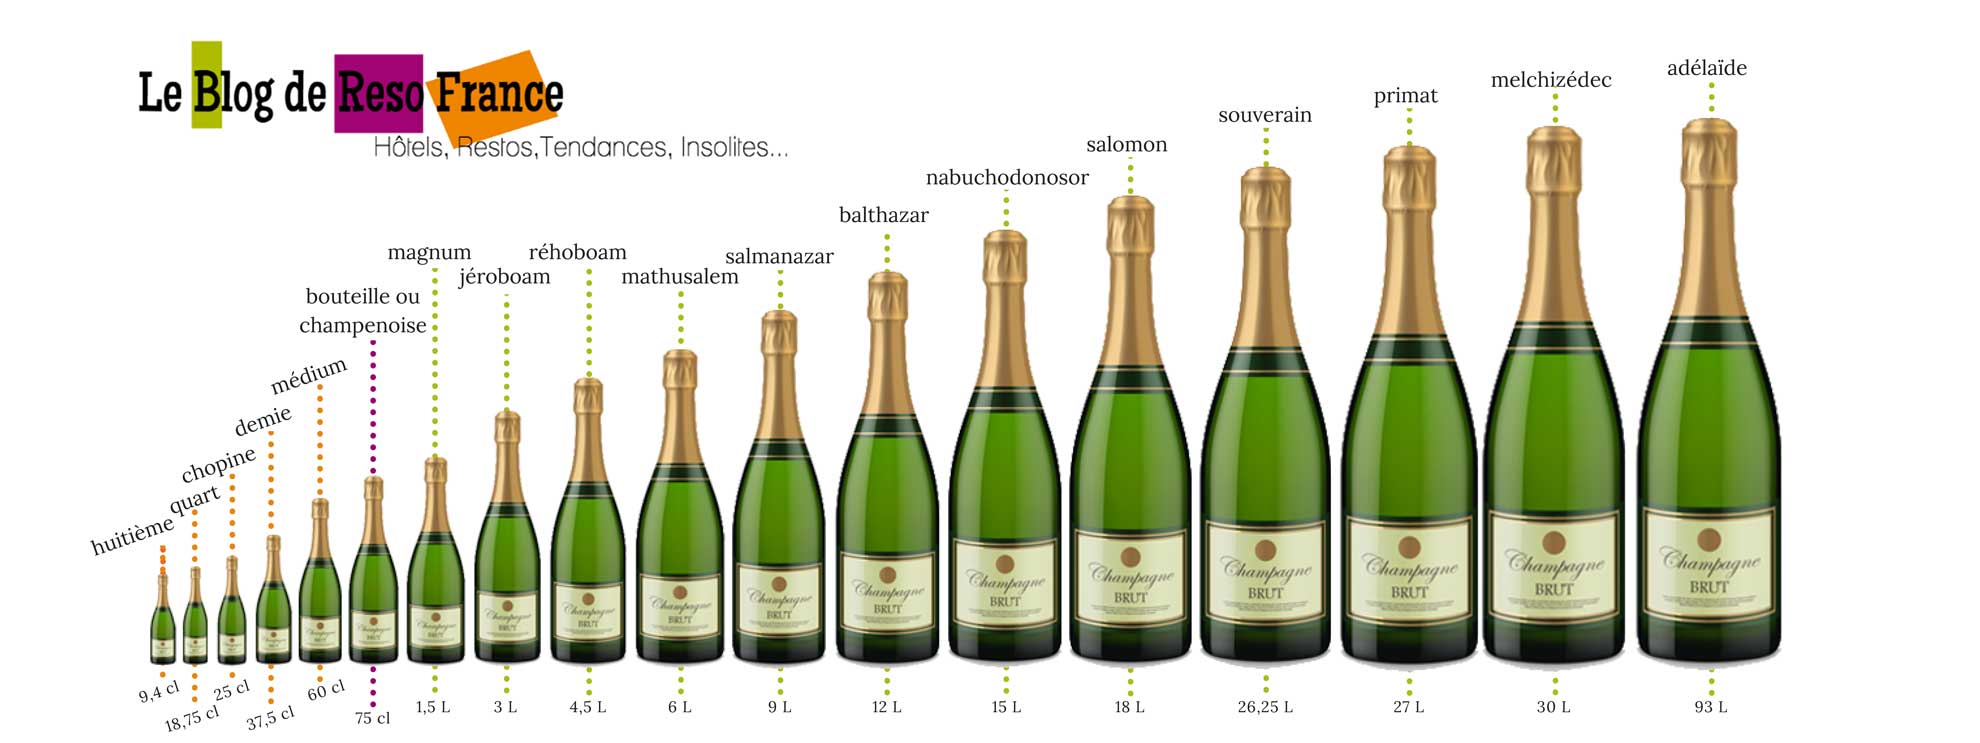 champagne-bottle-capacity-size.jpg